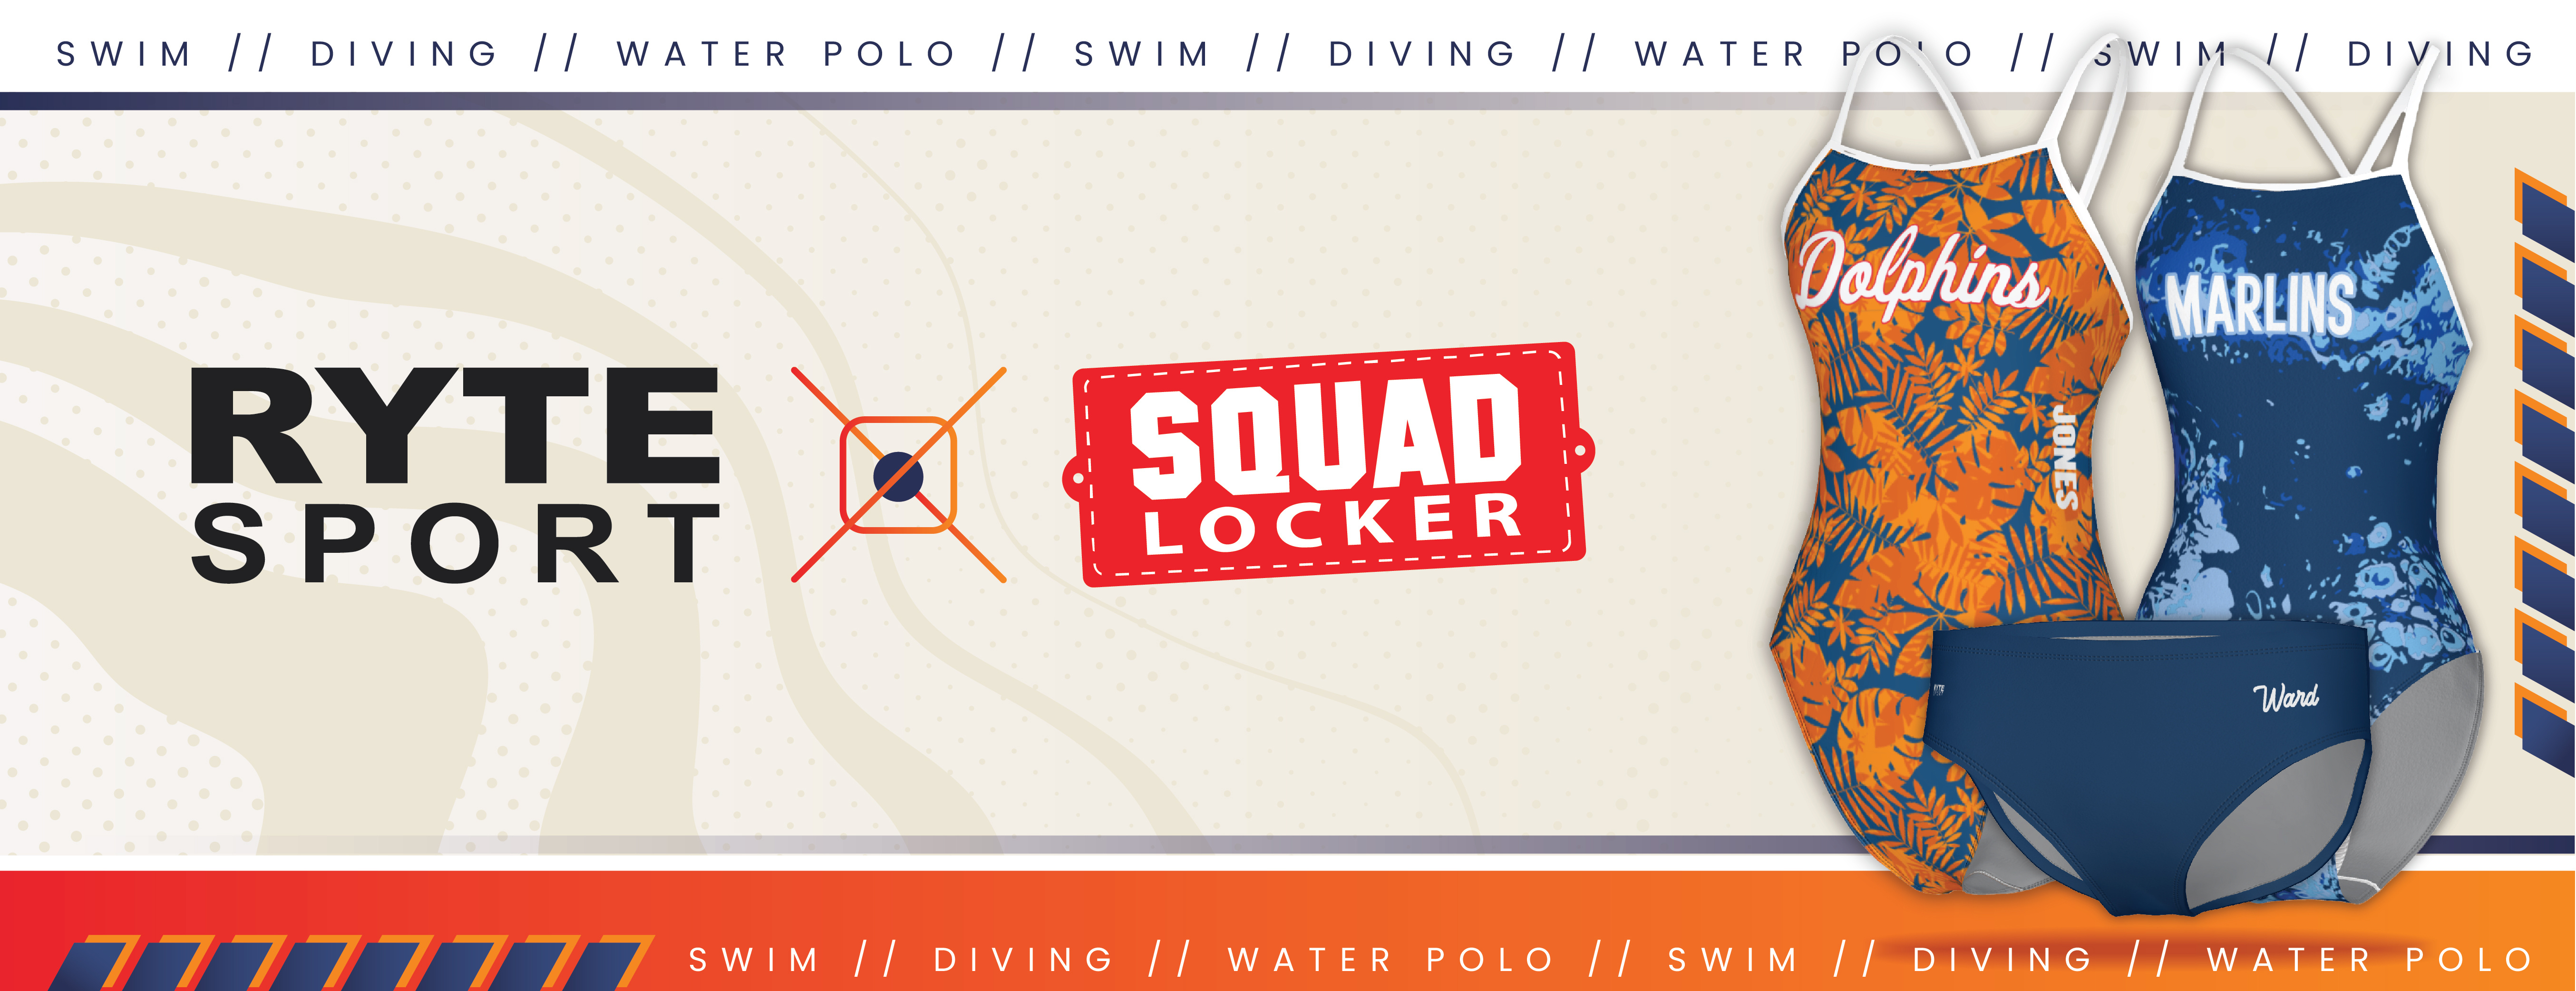 SquadLocker partners with RYTE Sport on sublimated swimwear